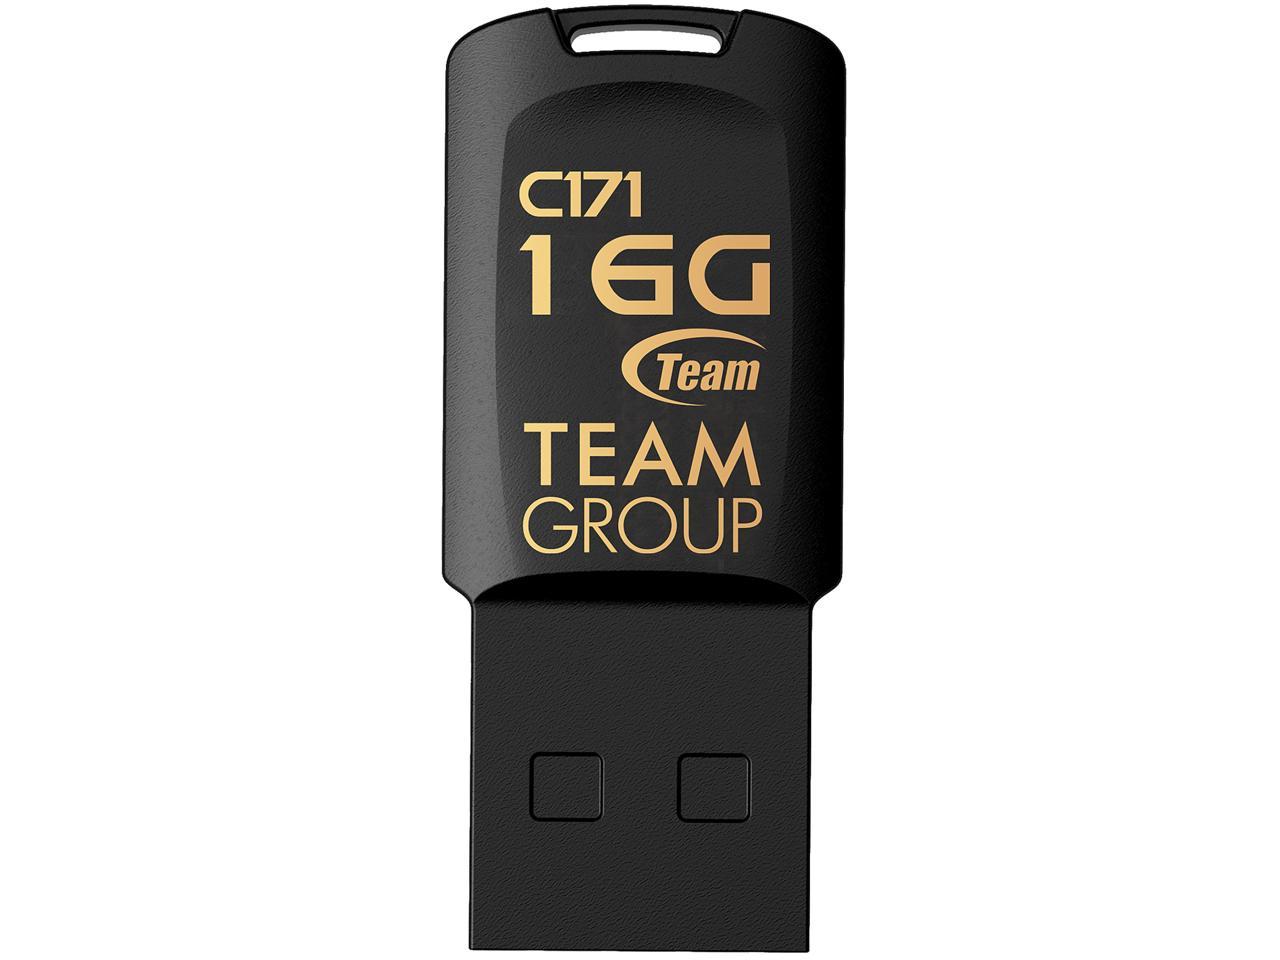 16GB Team Group C171 USB 2.0 Flash Drive $3.79 + Free Shipping